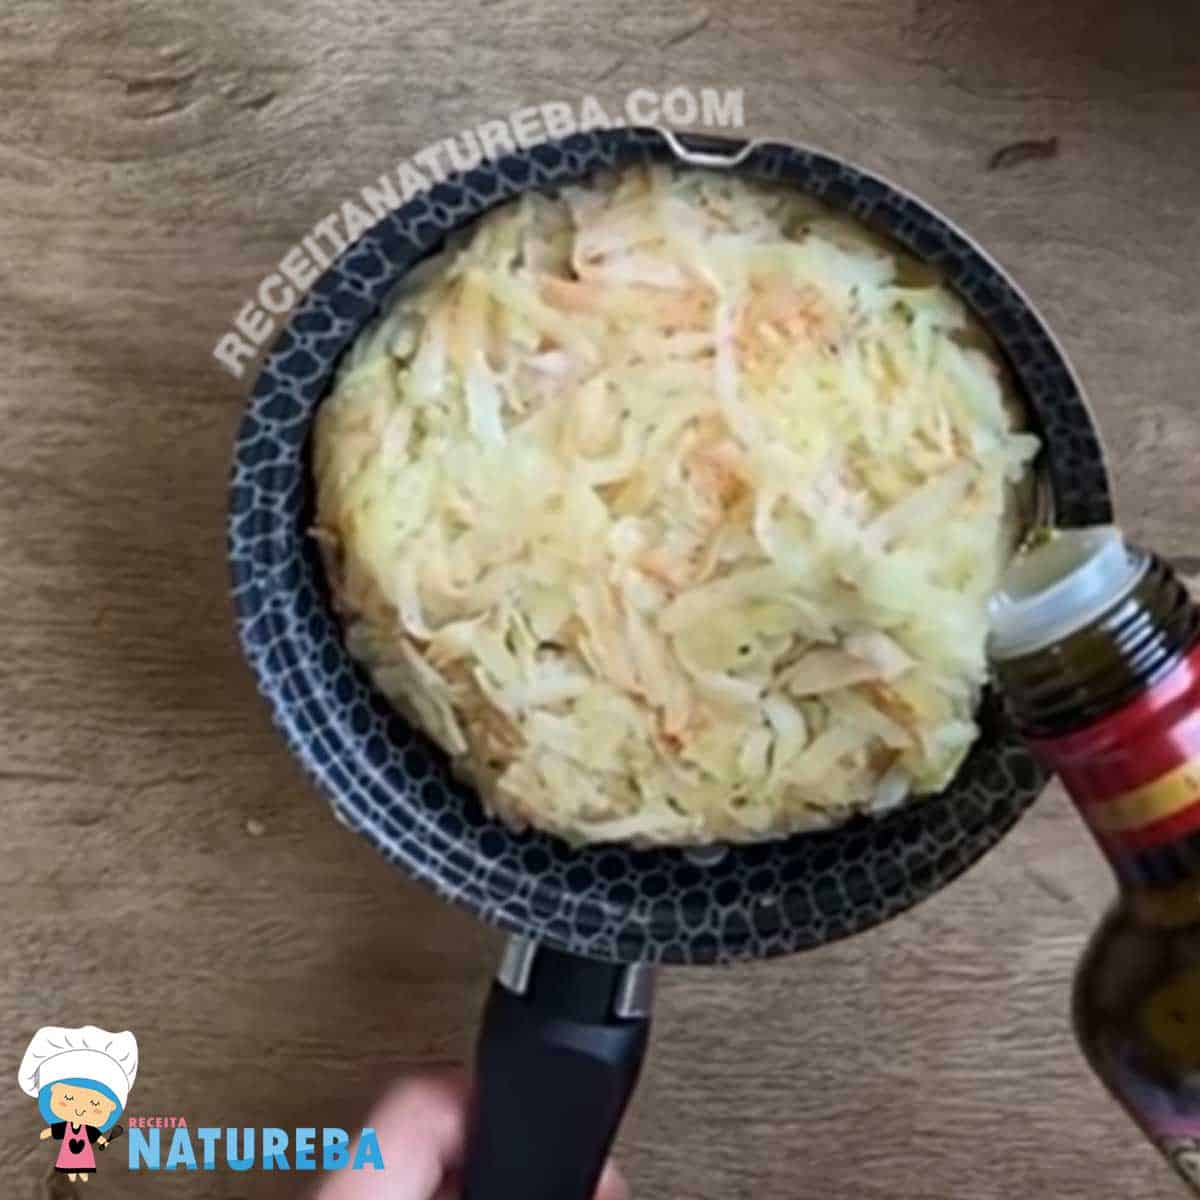 adicionando azeite na batata